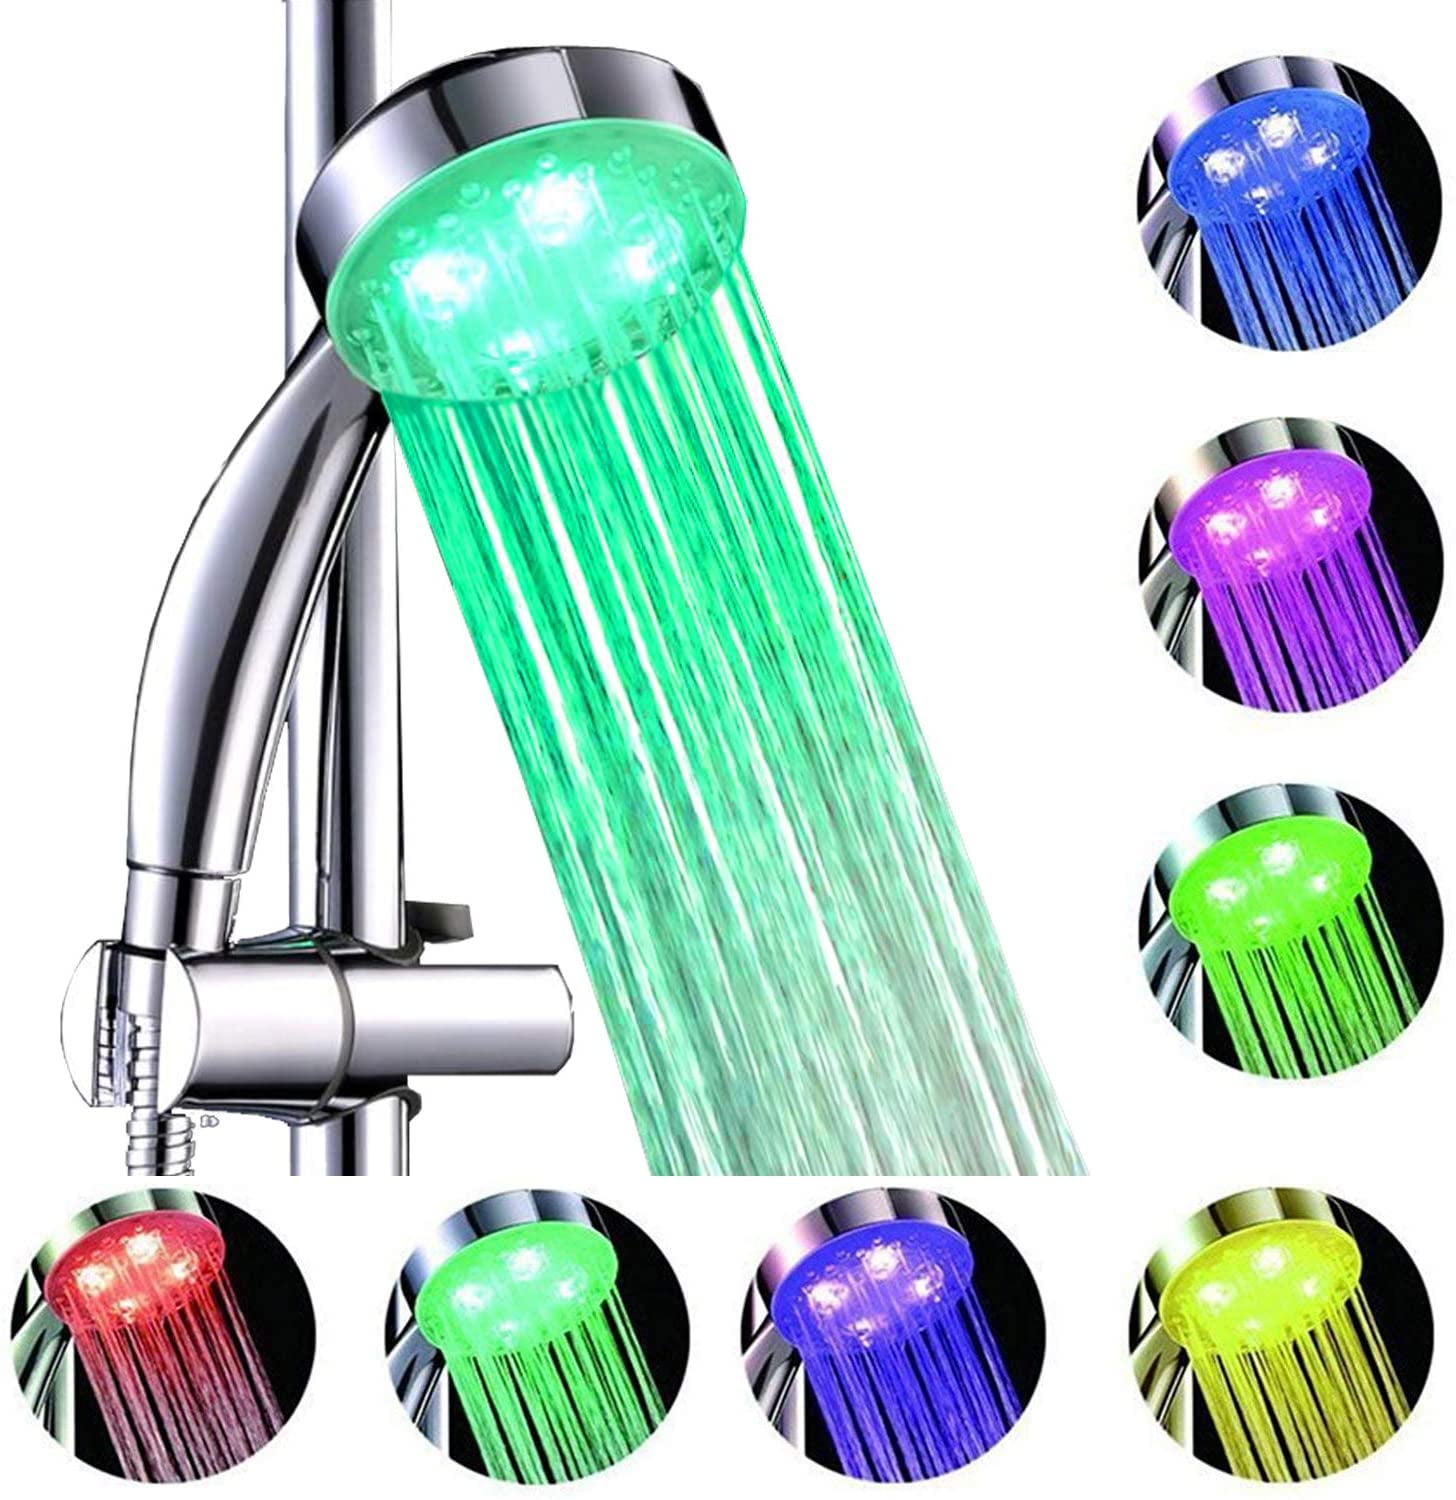 Romantic 3/7 Color Change LED Light Shower Head Water Bath Home Bathroom Glow